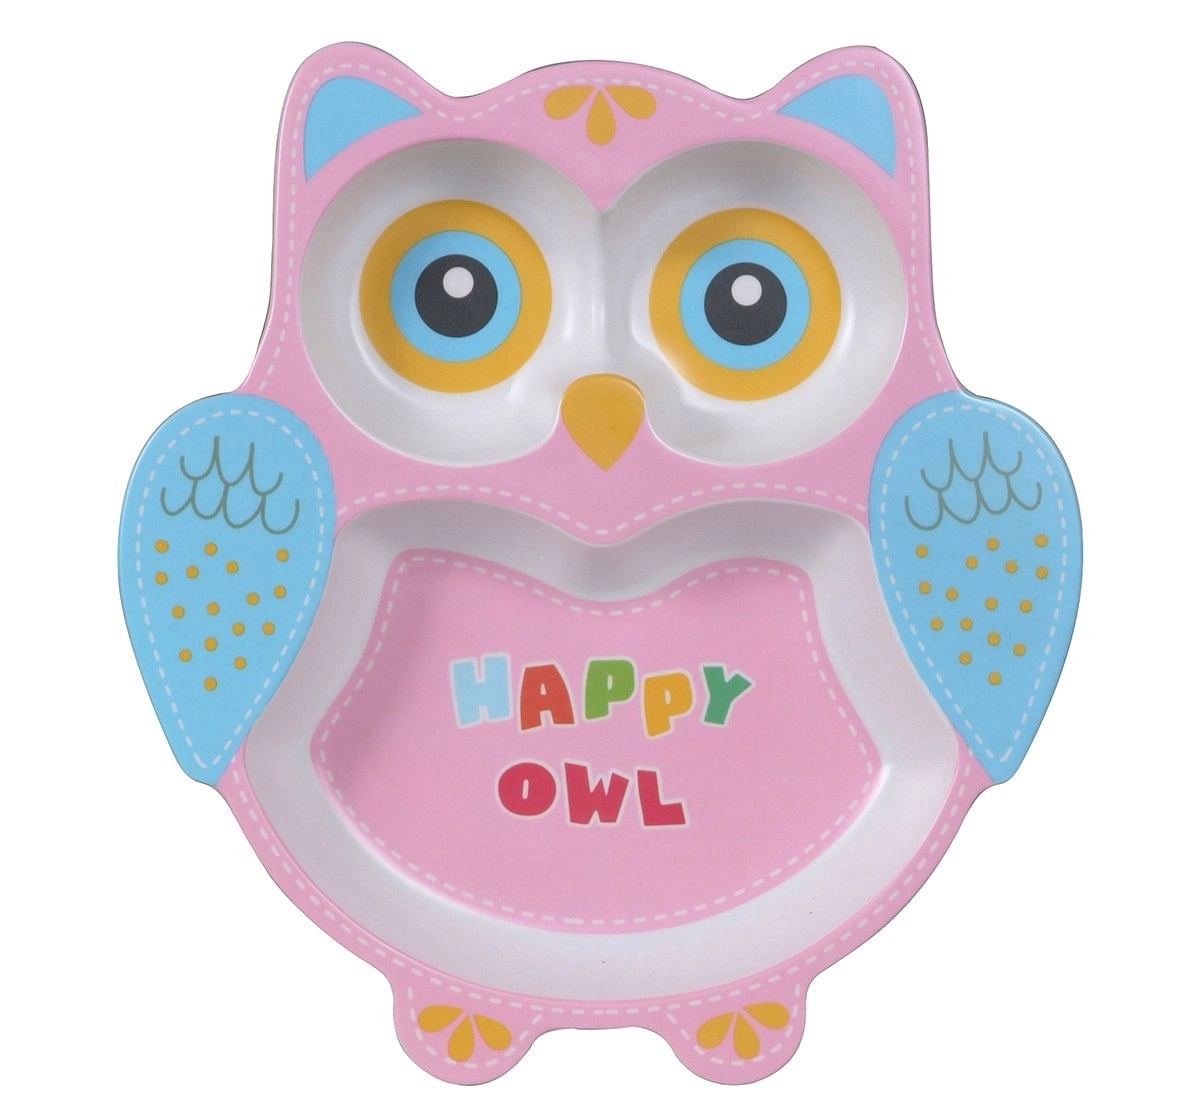 Polka Tots Bmbo Fib 5 Pieces Dinning, Happy Owl, 0M+ (Pink)